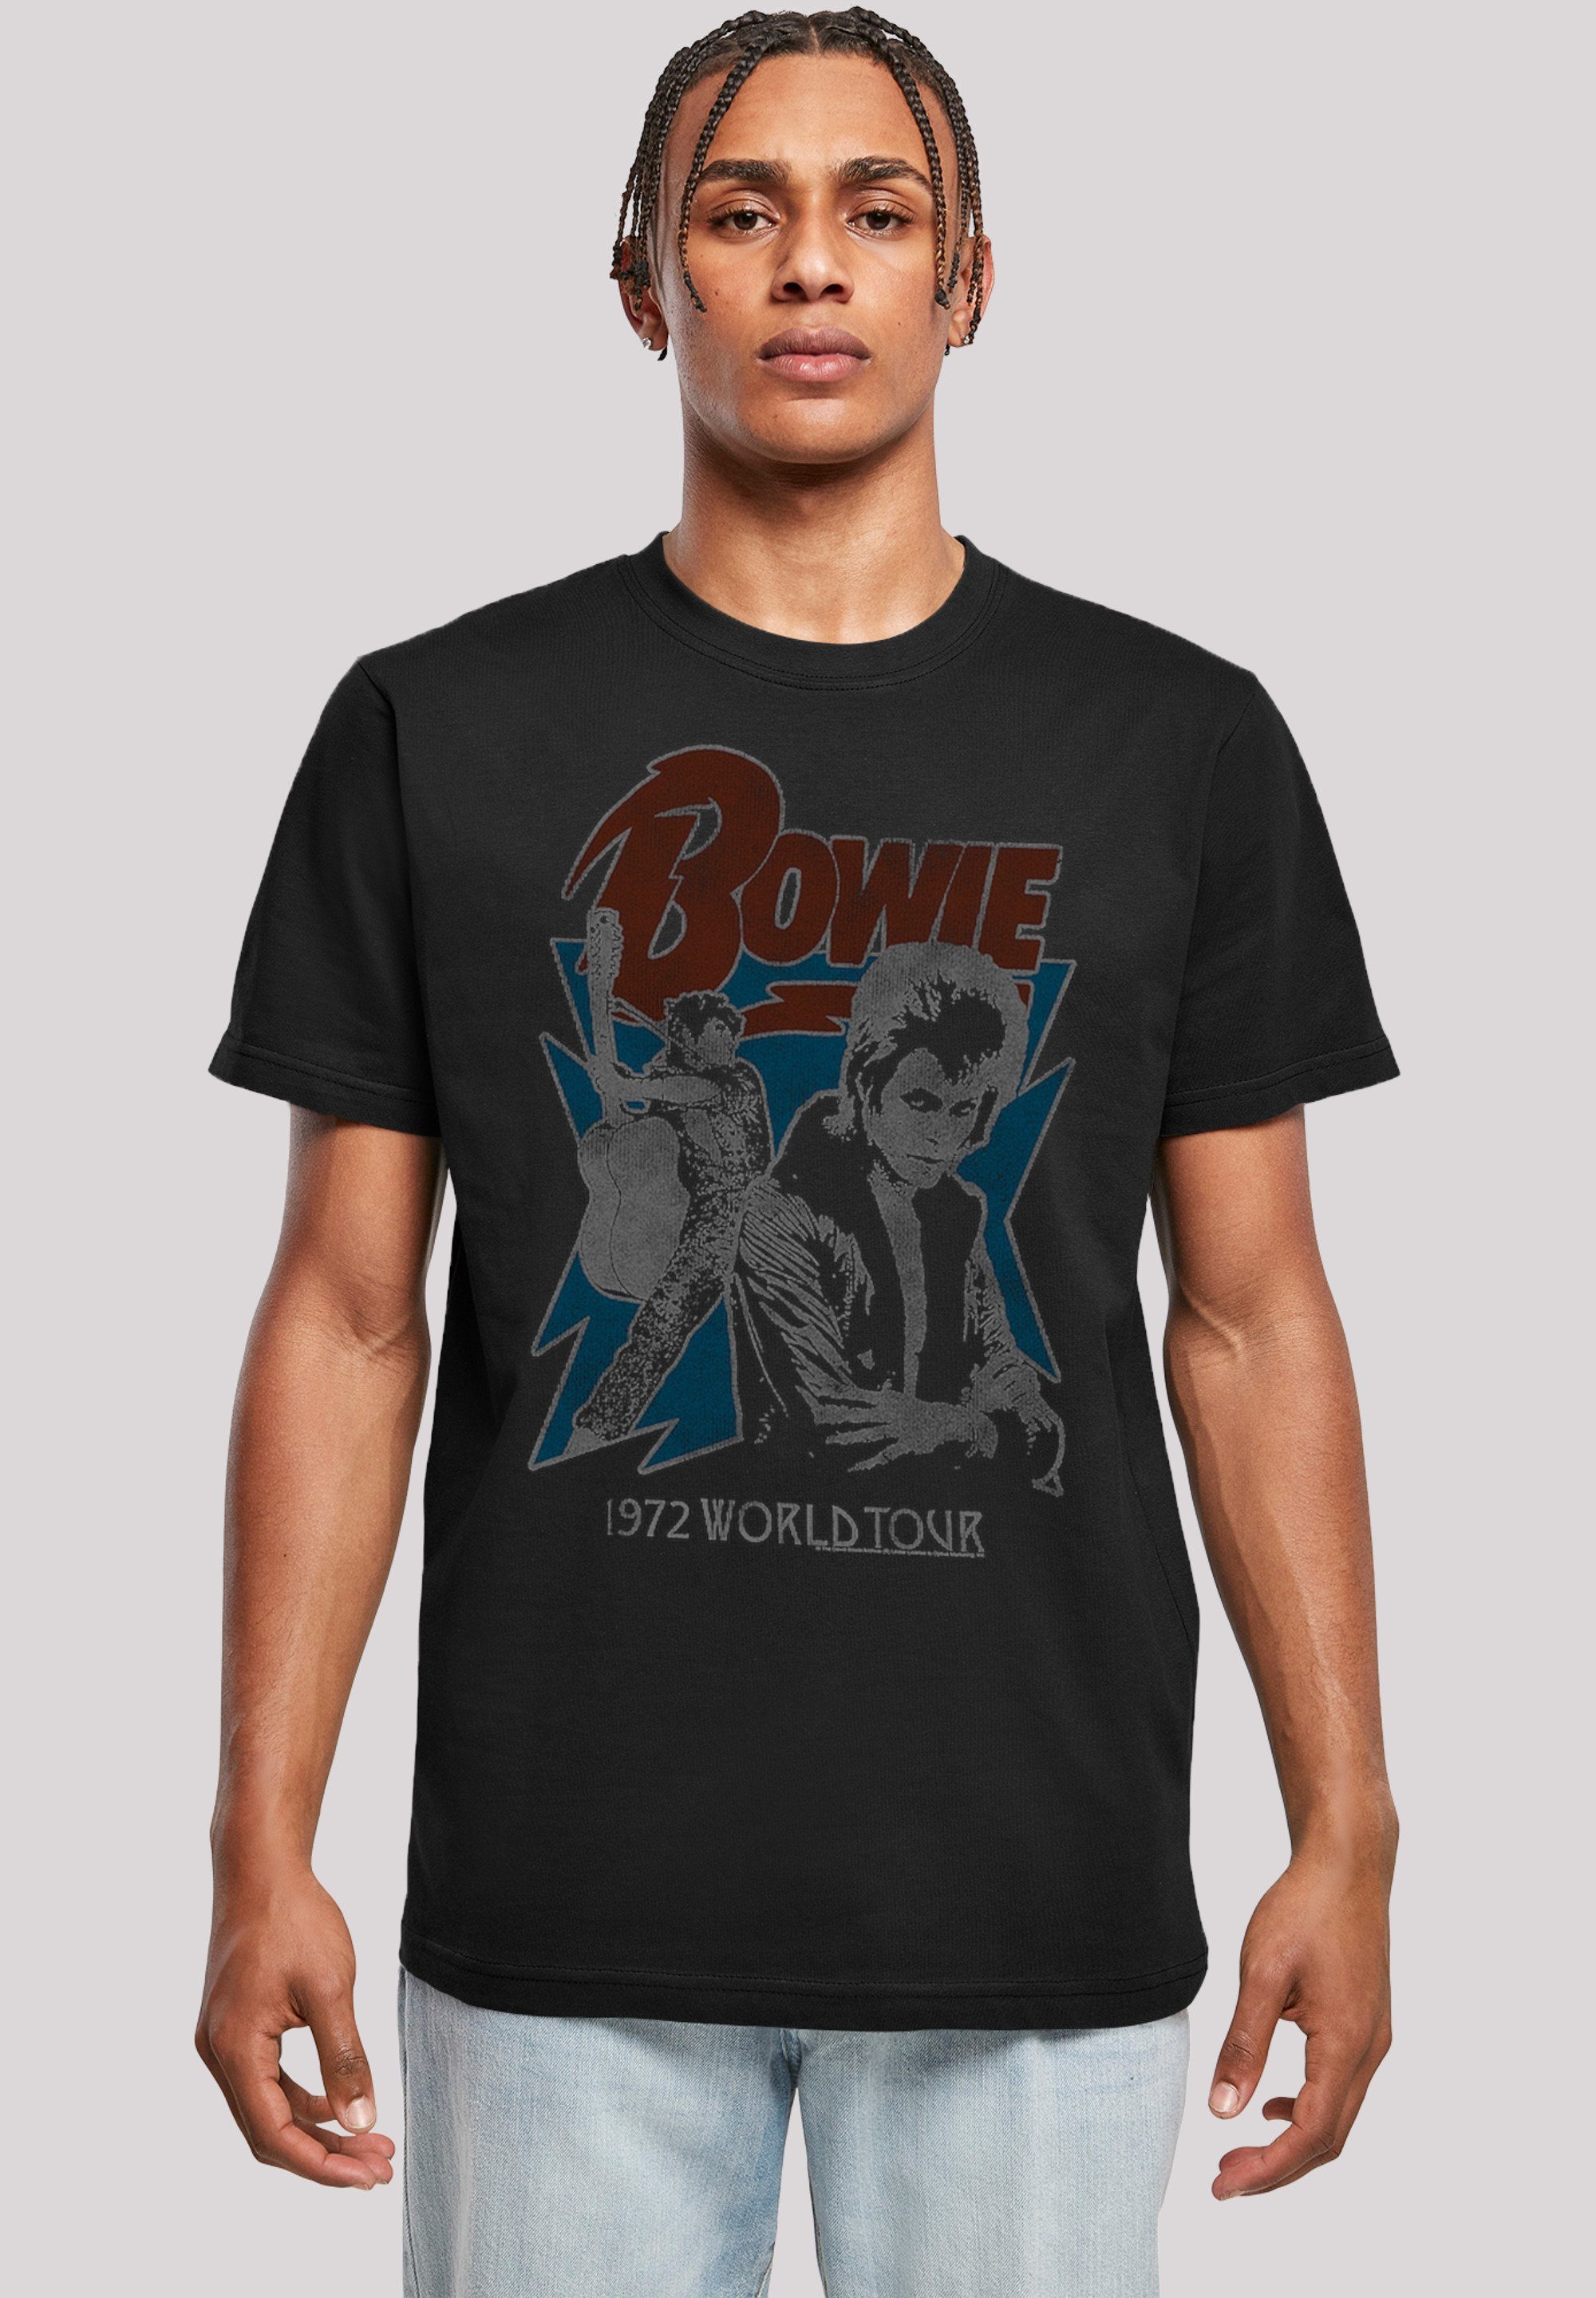 Tour David Herren,Premium F4NT4STIC Merch,Regular-Fit,Basic,Bandshirt T-Shirt 1972 Bowie World